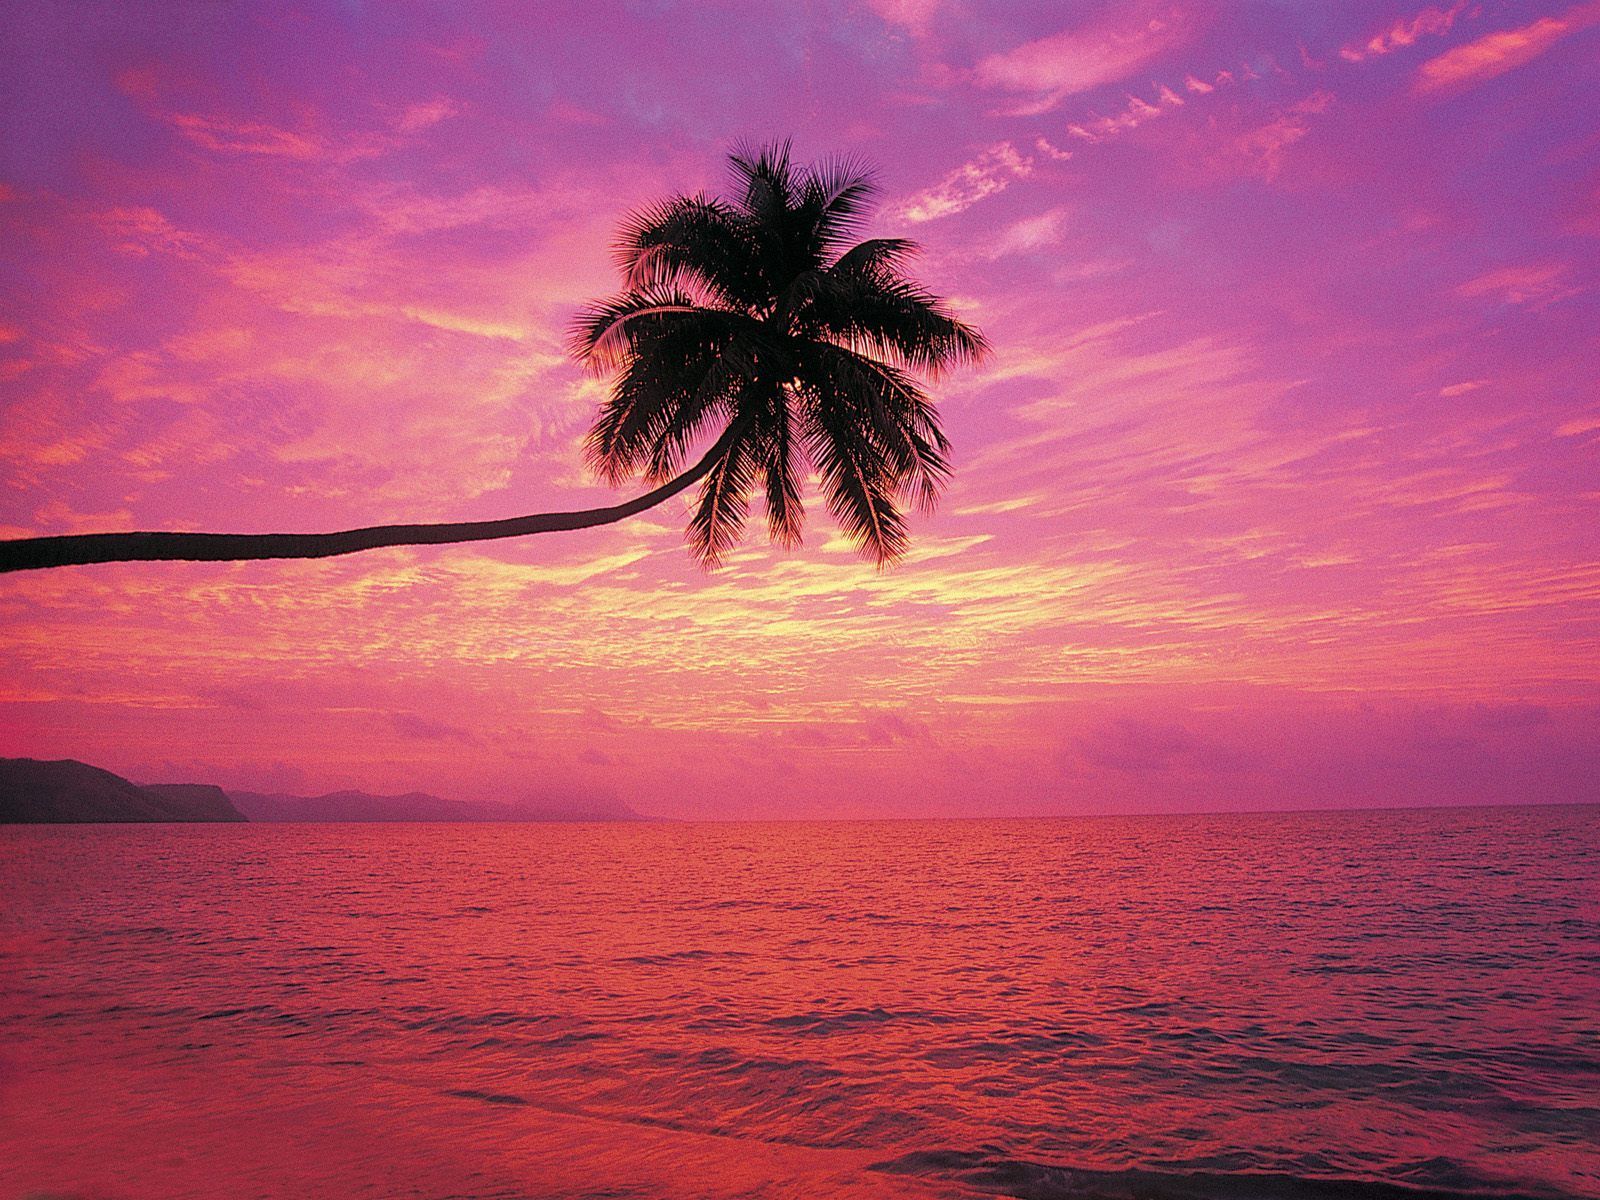 Fiji. travel globe picture.com. Beach wallpaper, Sunset wallpaper, Beach background